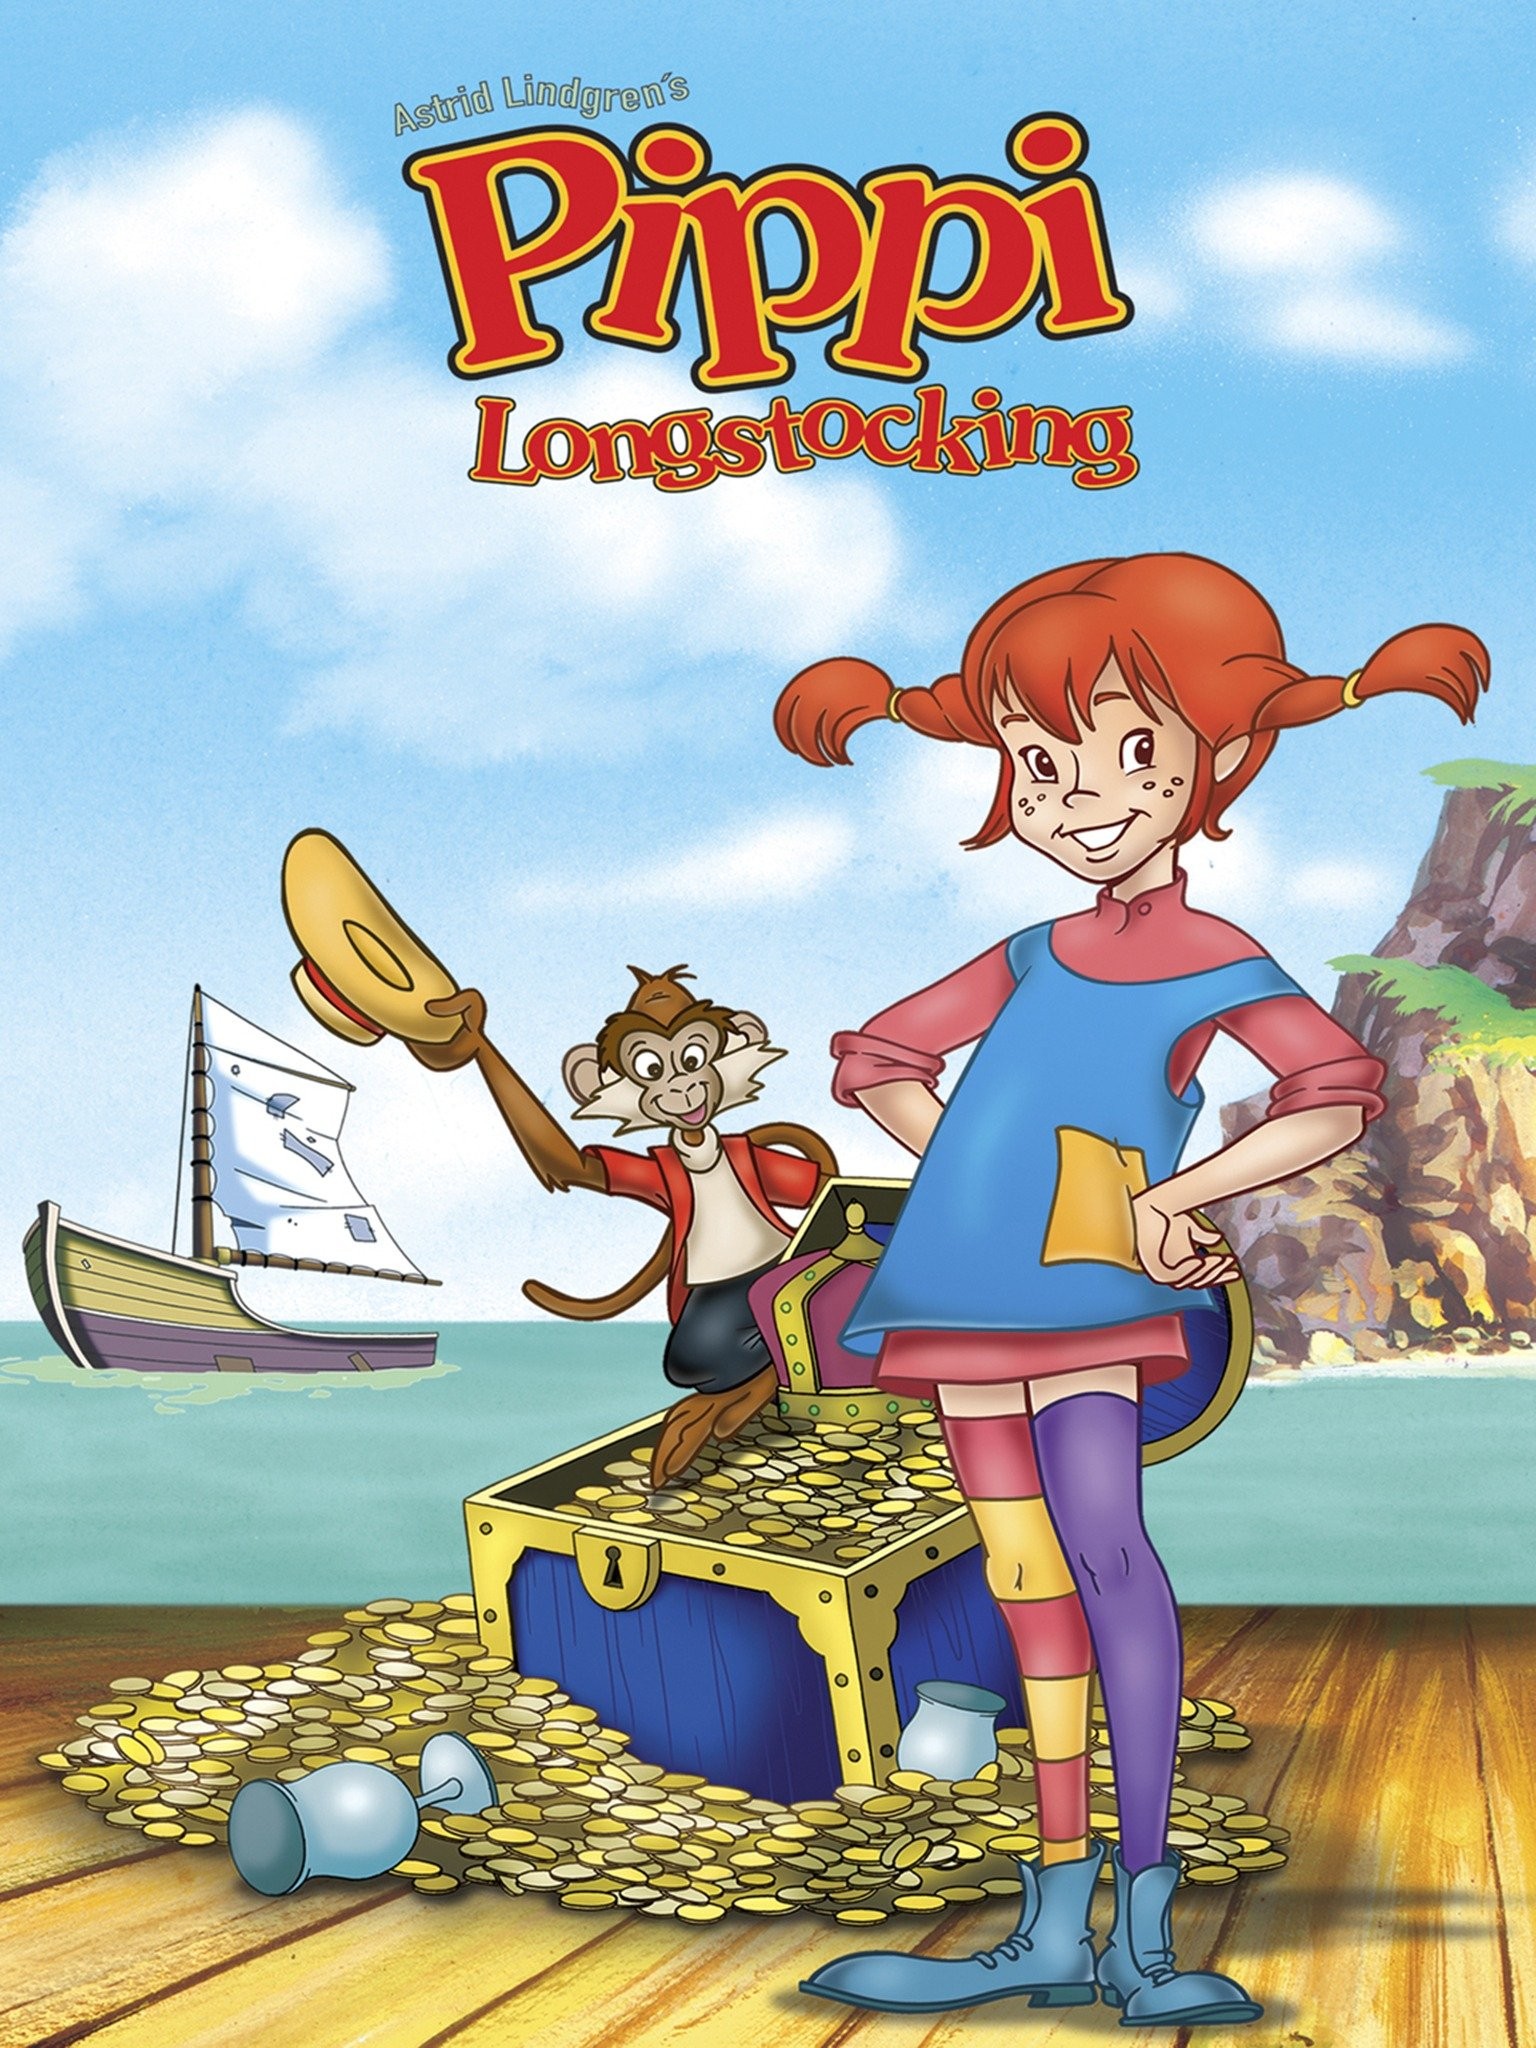 Pippi calzaslargas poster